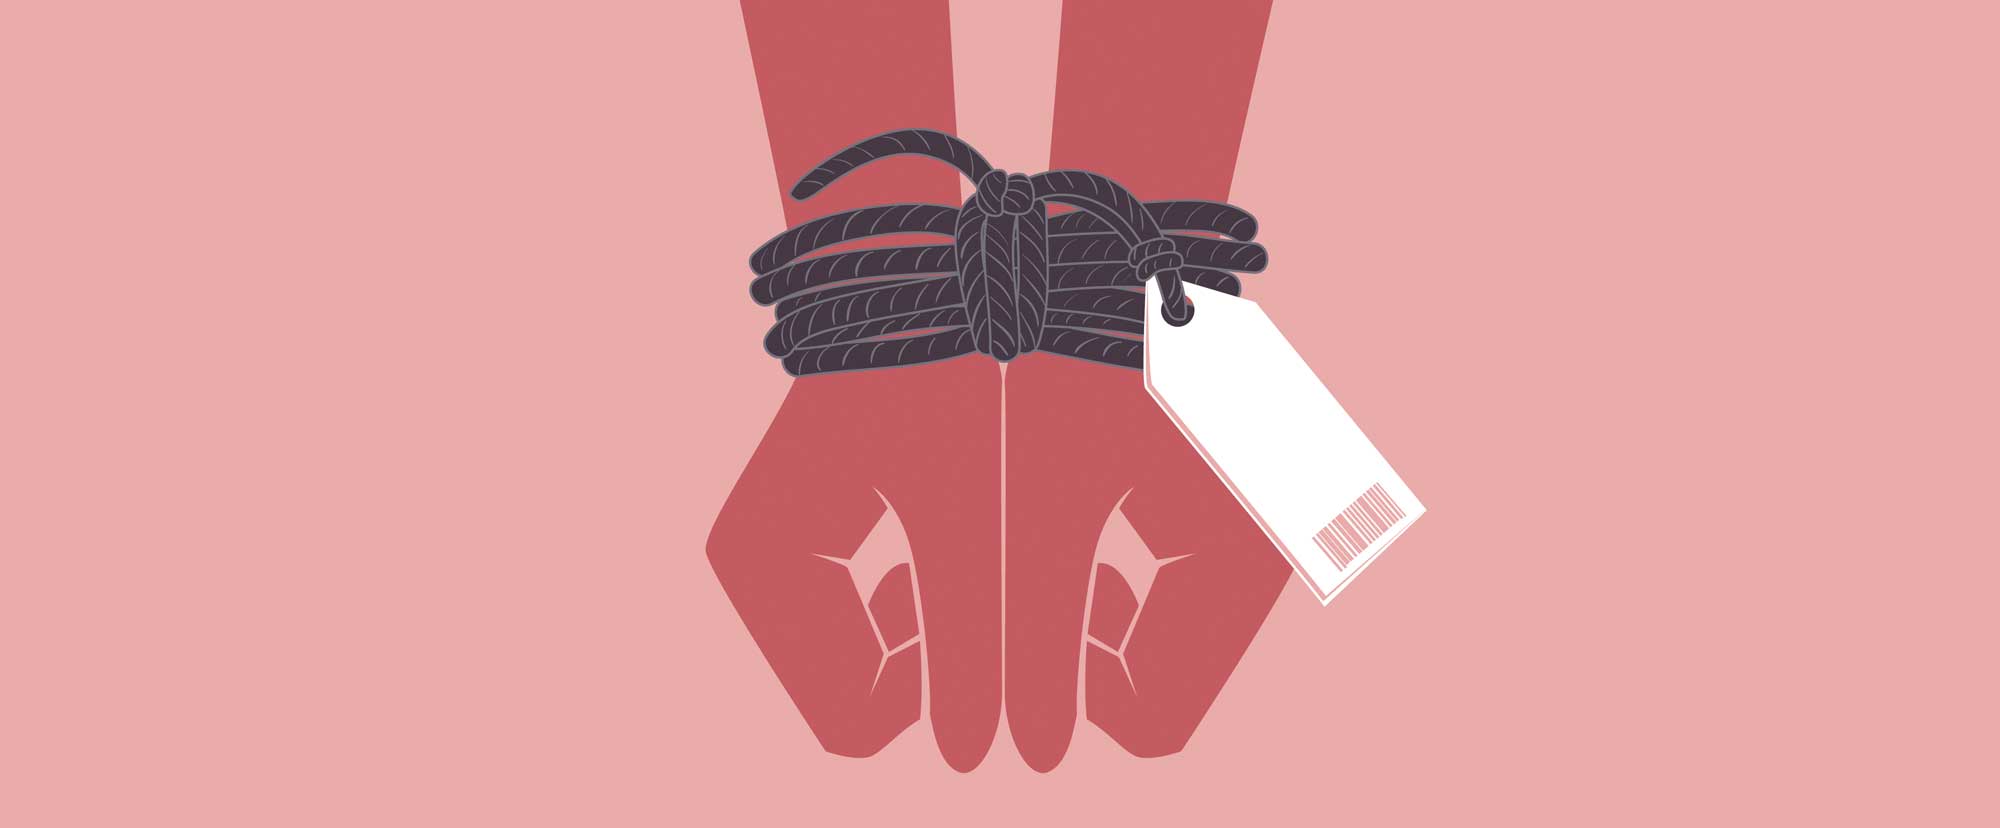 Trafficking In Human Beings: Modern Slavery